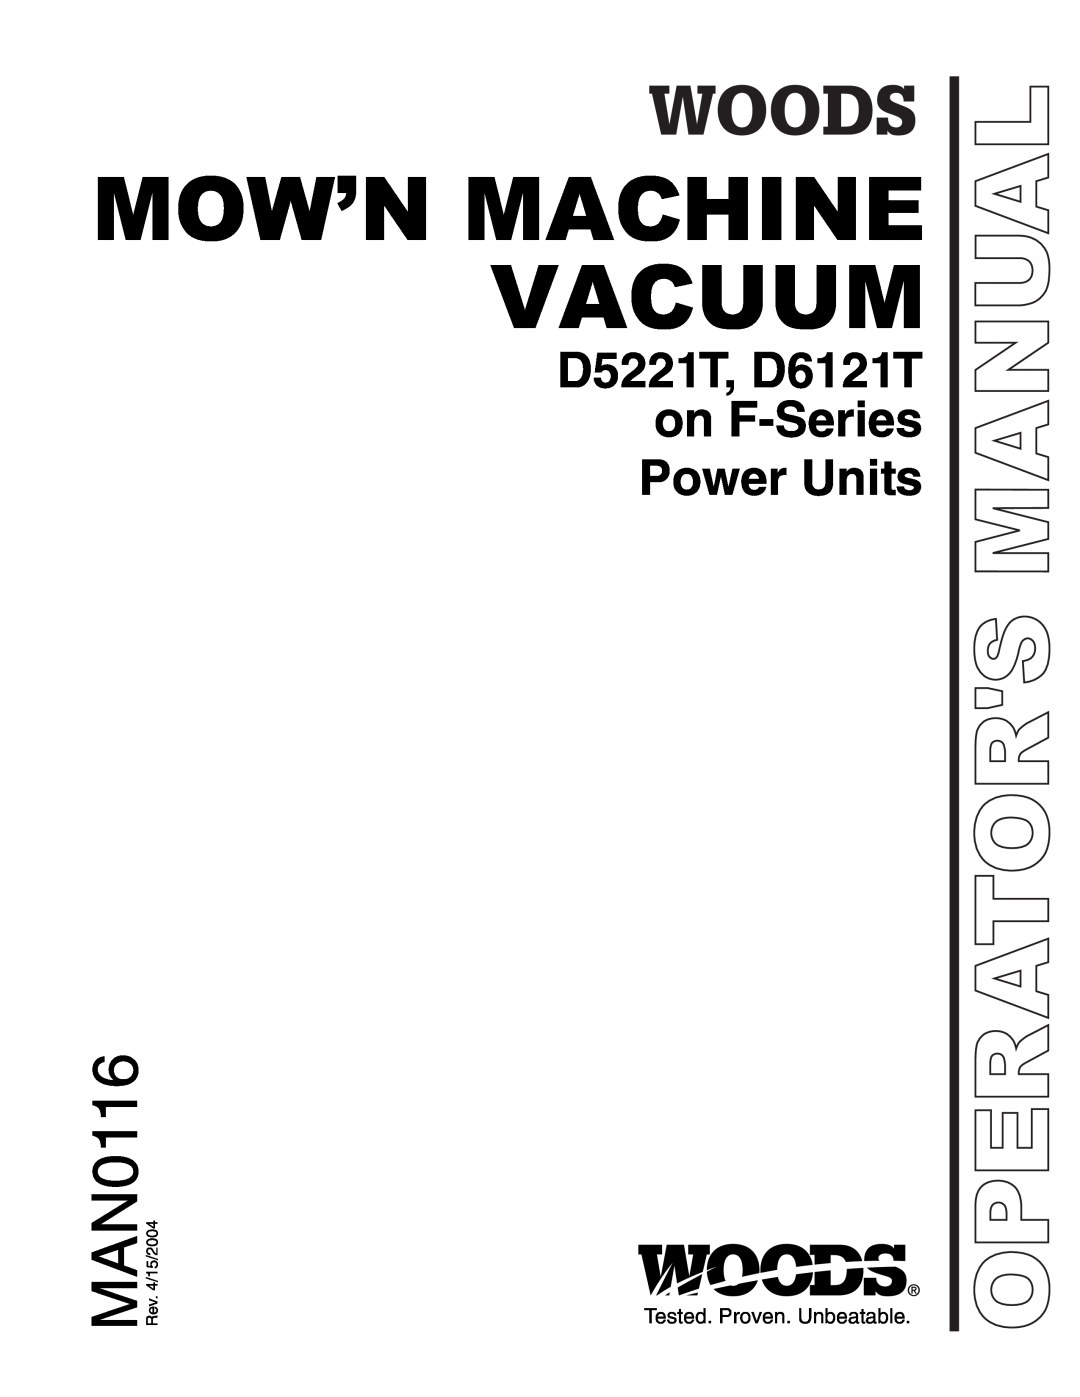 Woods Equipment manual Mow’N Machine Vacuum, MAN0116, Power Units, D5221T, D6121T on F-Series, Operators Manual 